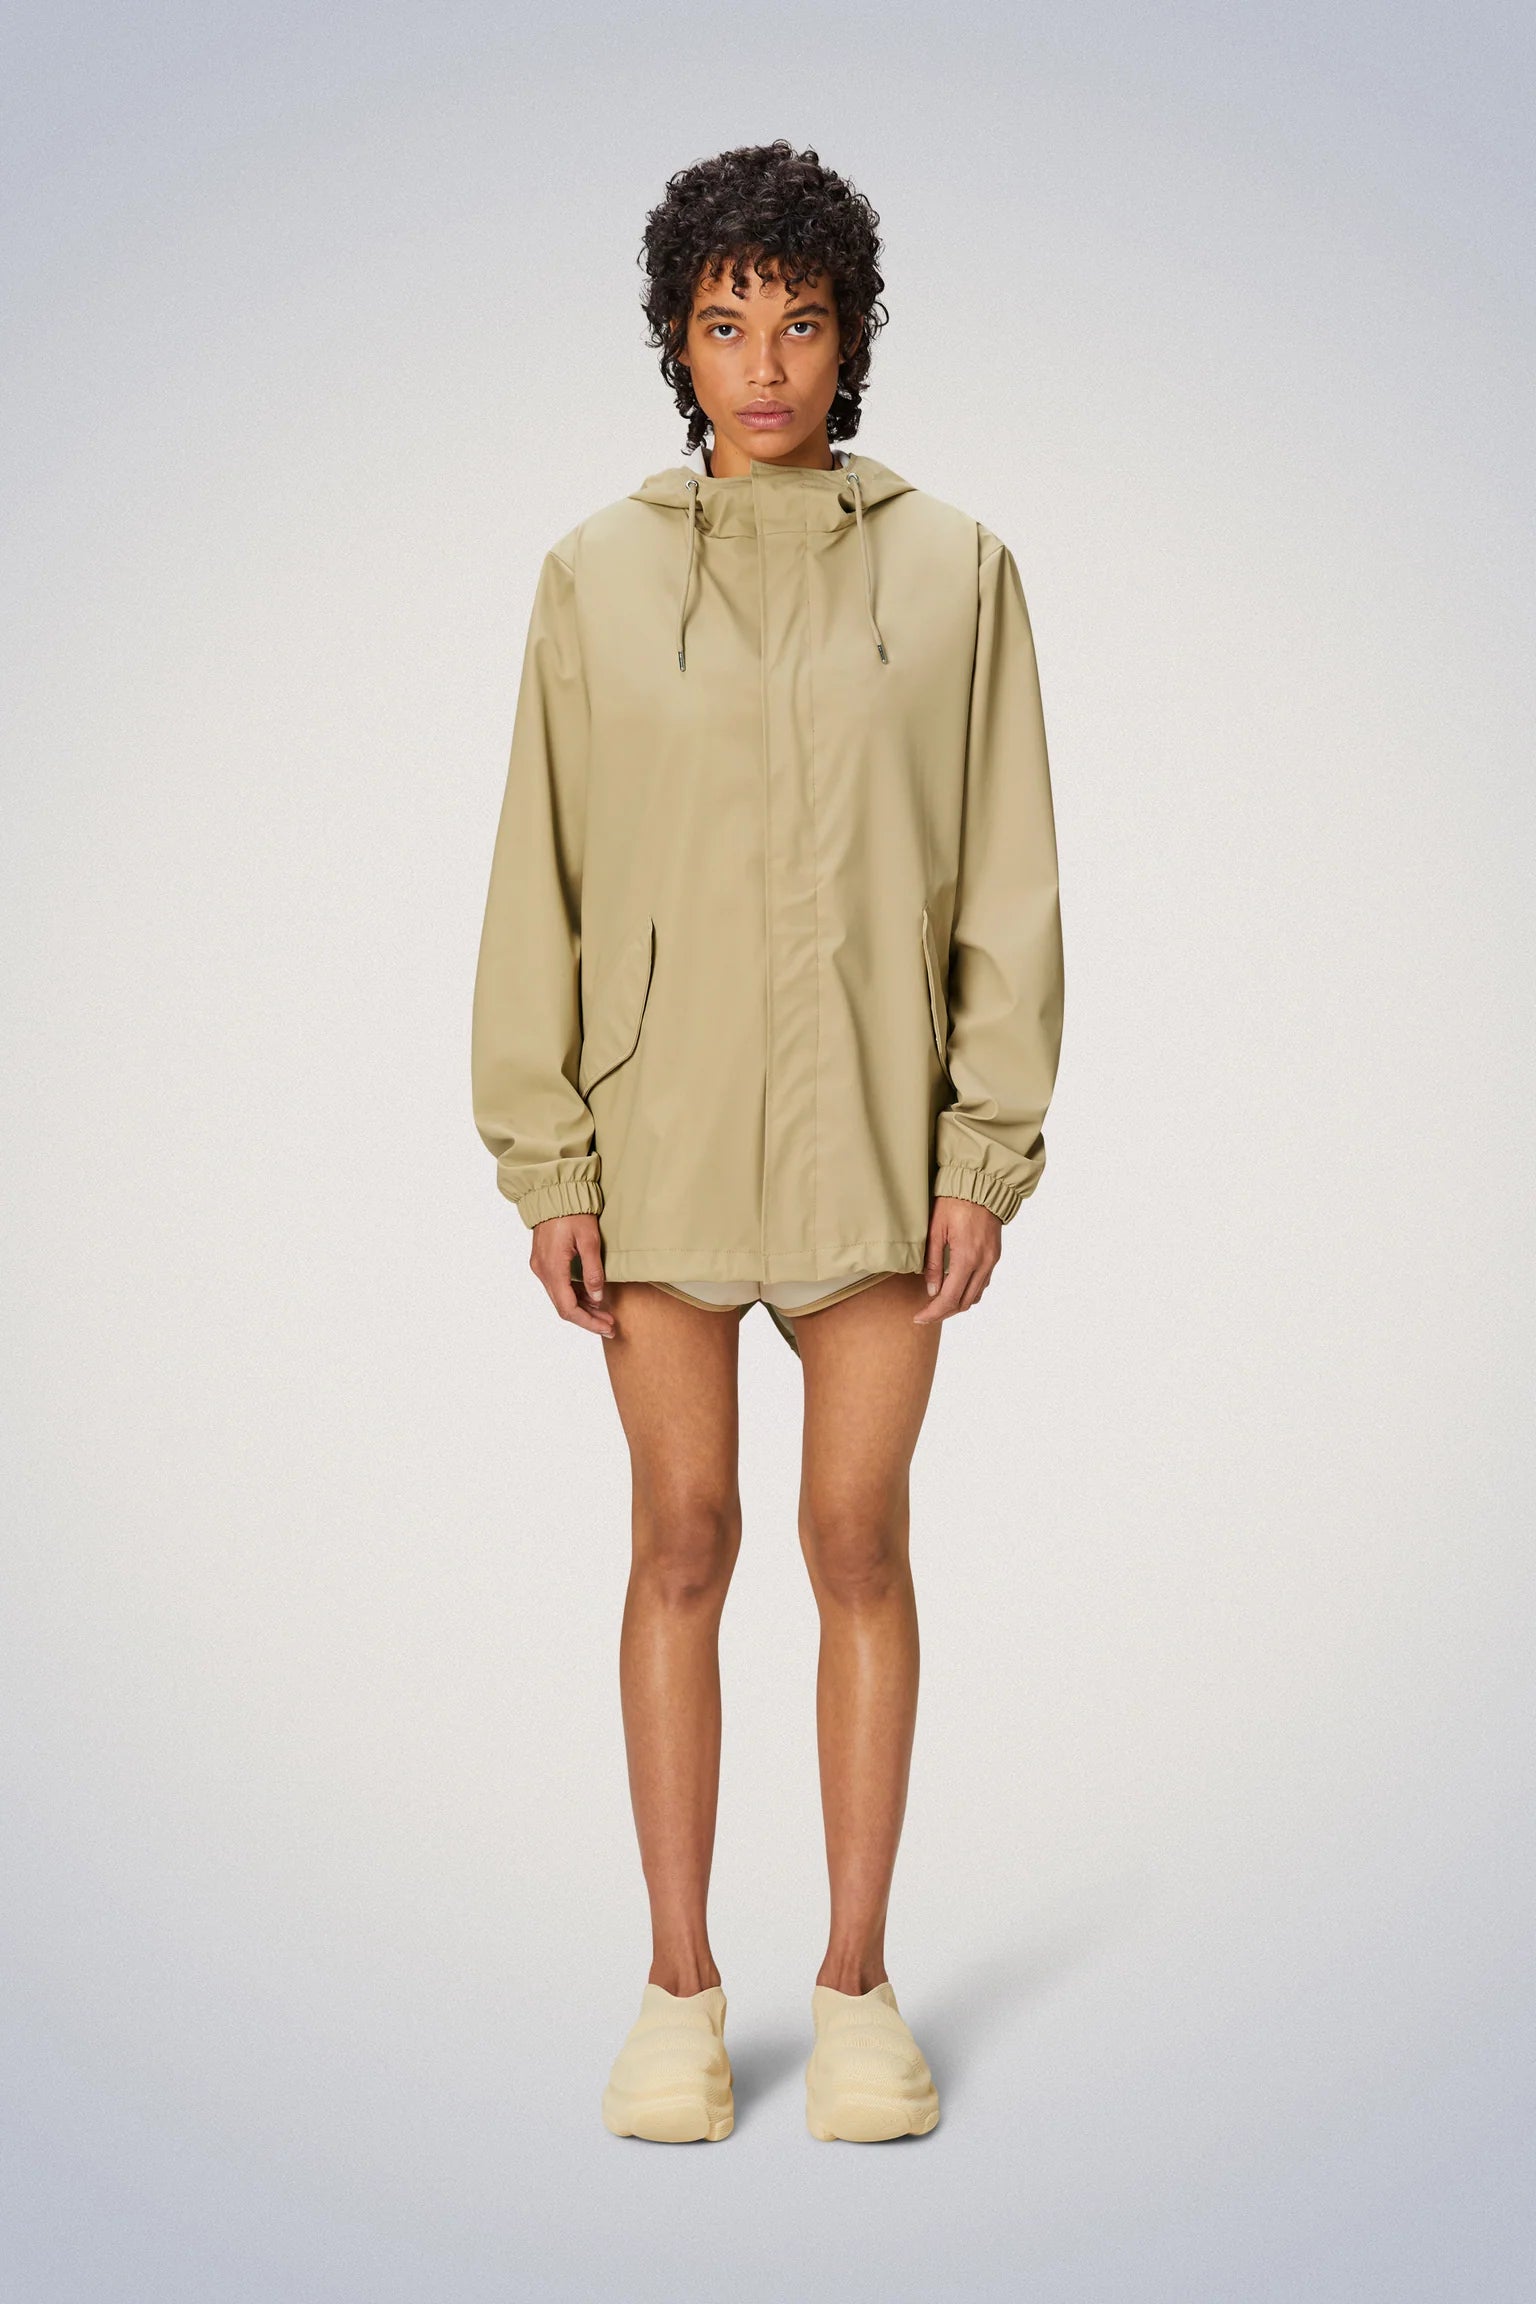 A woman wearing a Rains drawstring fishtail hem rain jacket and shorts.